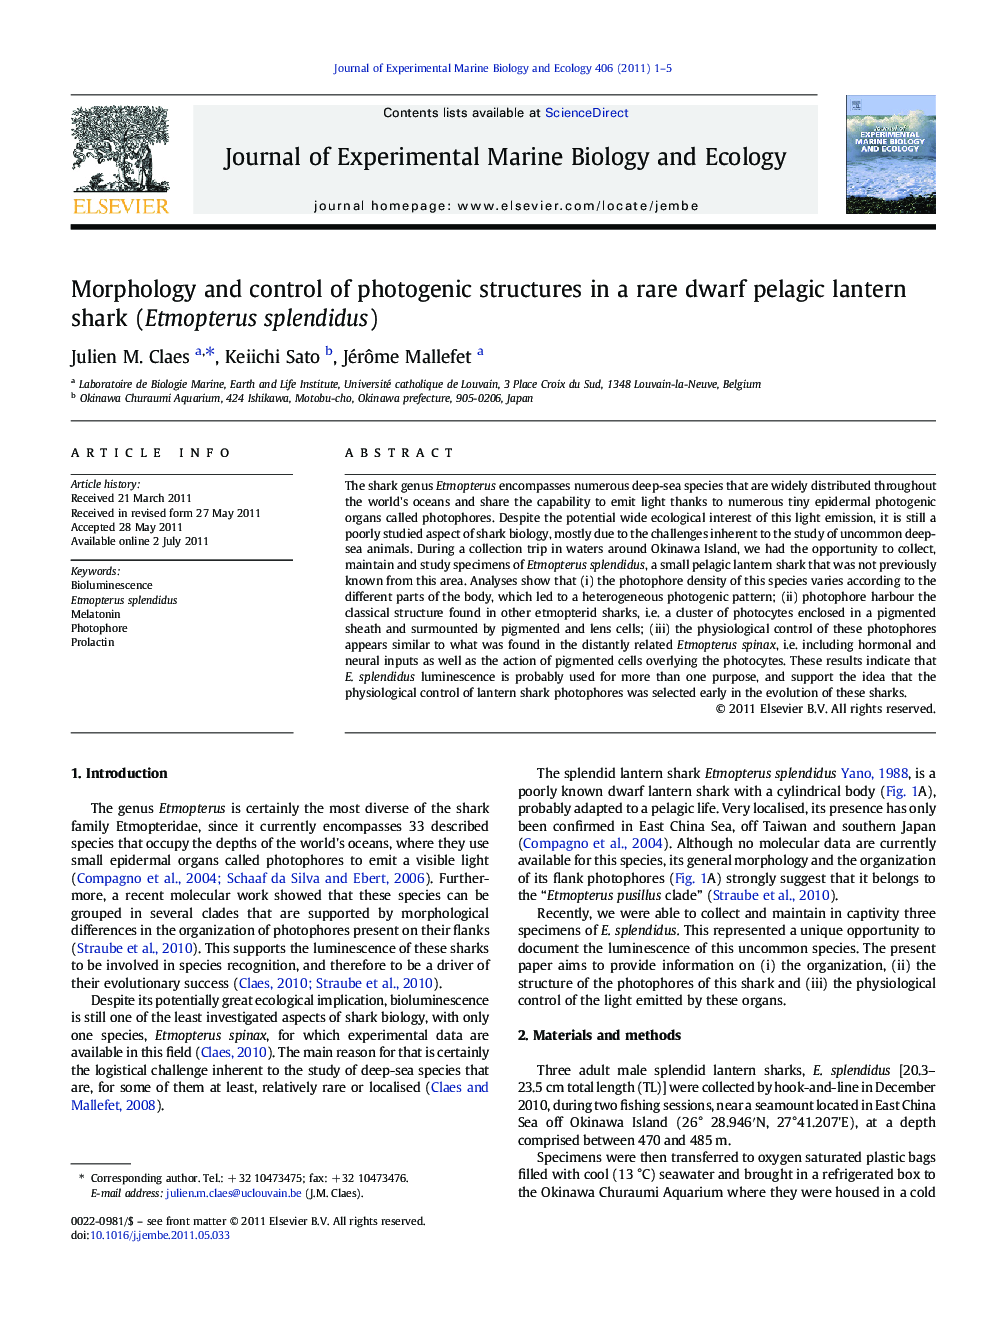 Morphology and control of photogenic structures in a rare dwarf pelagic lantern shark (Etmopterus splendidus)